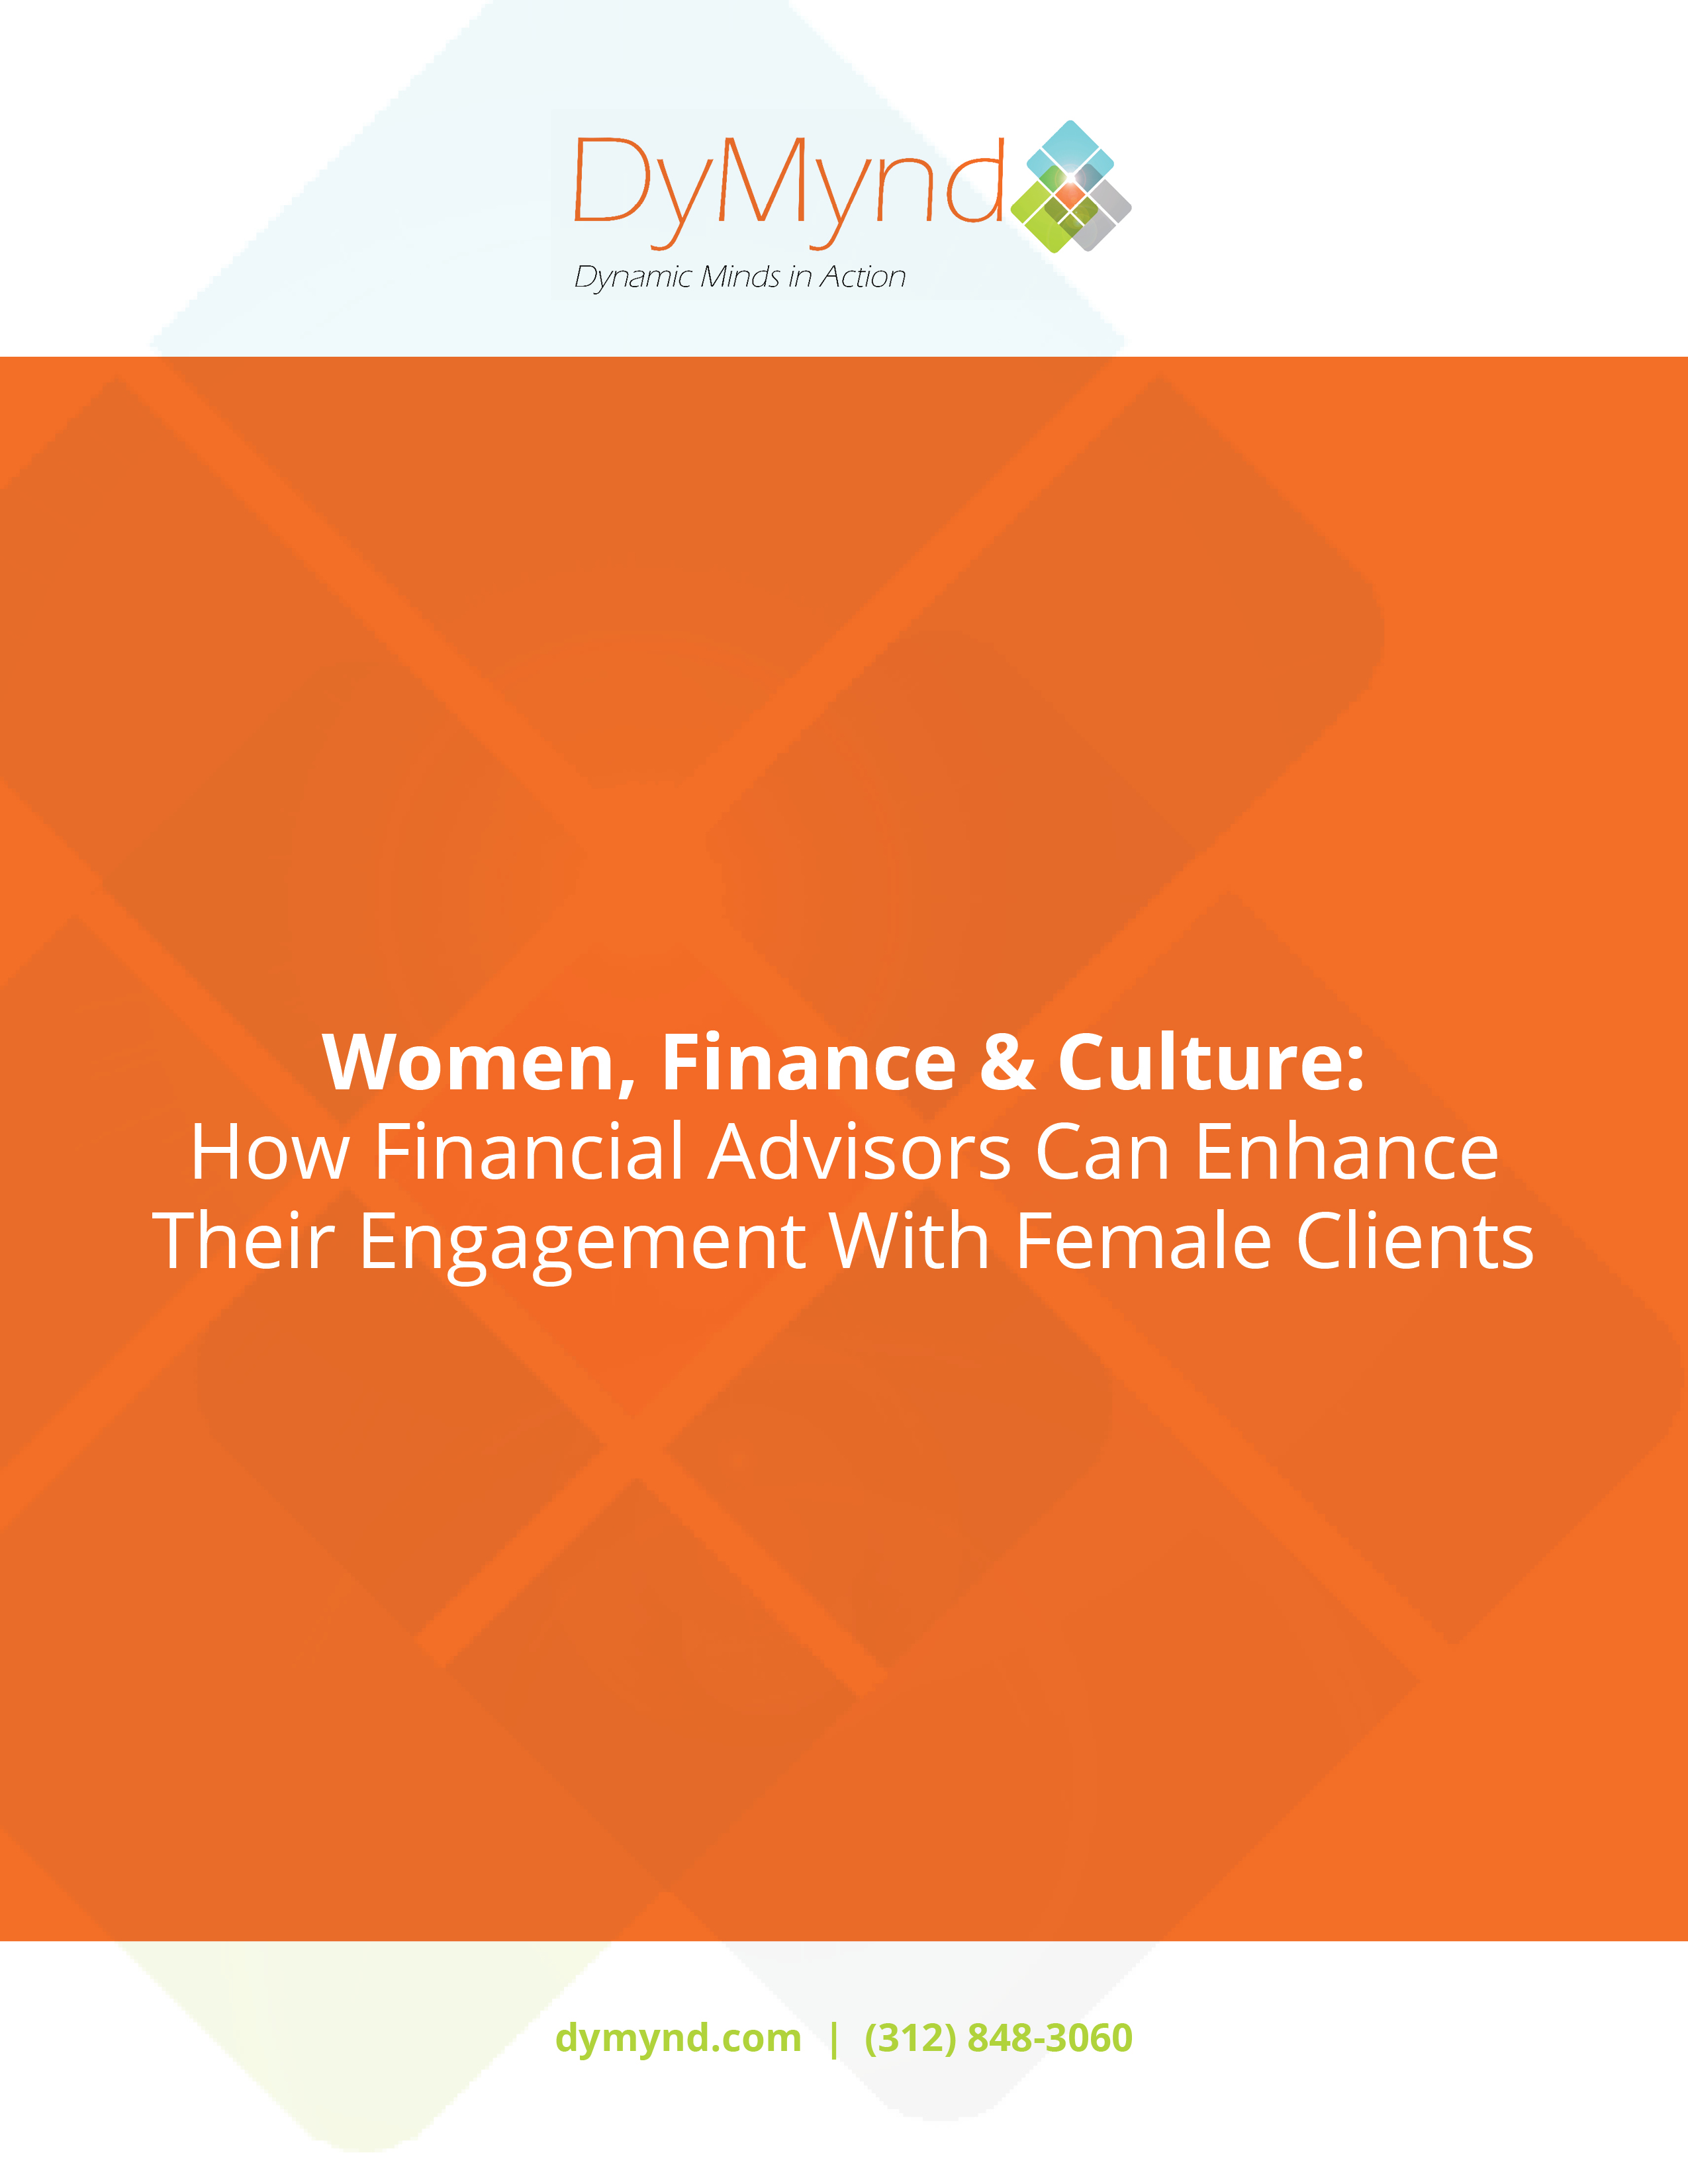 Women, Finance & Culture Whitepaper